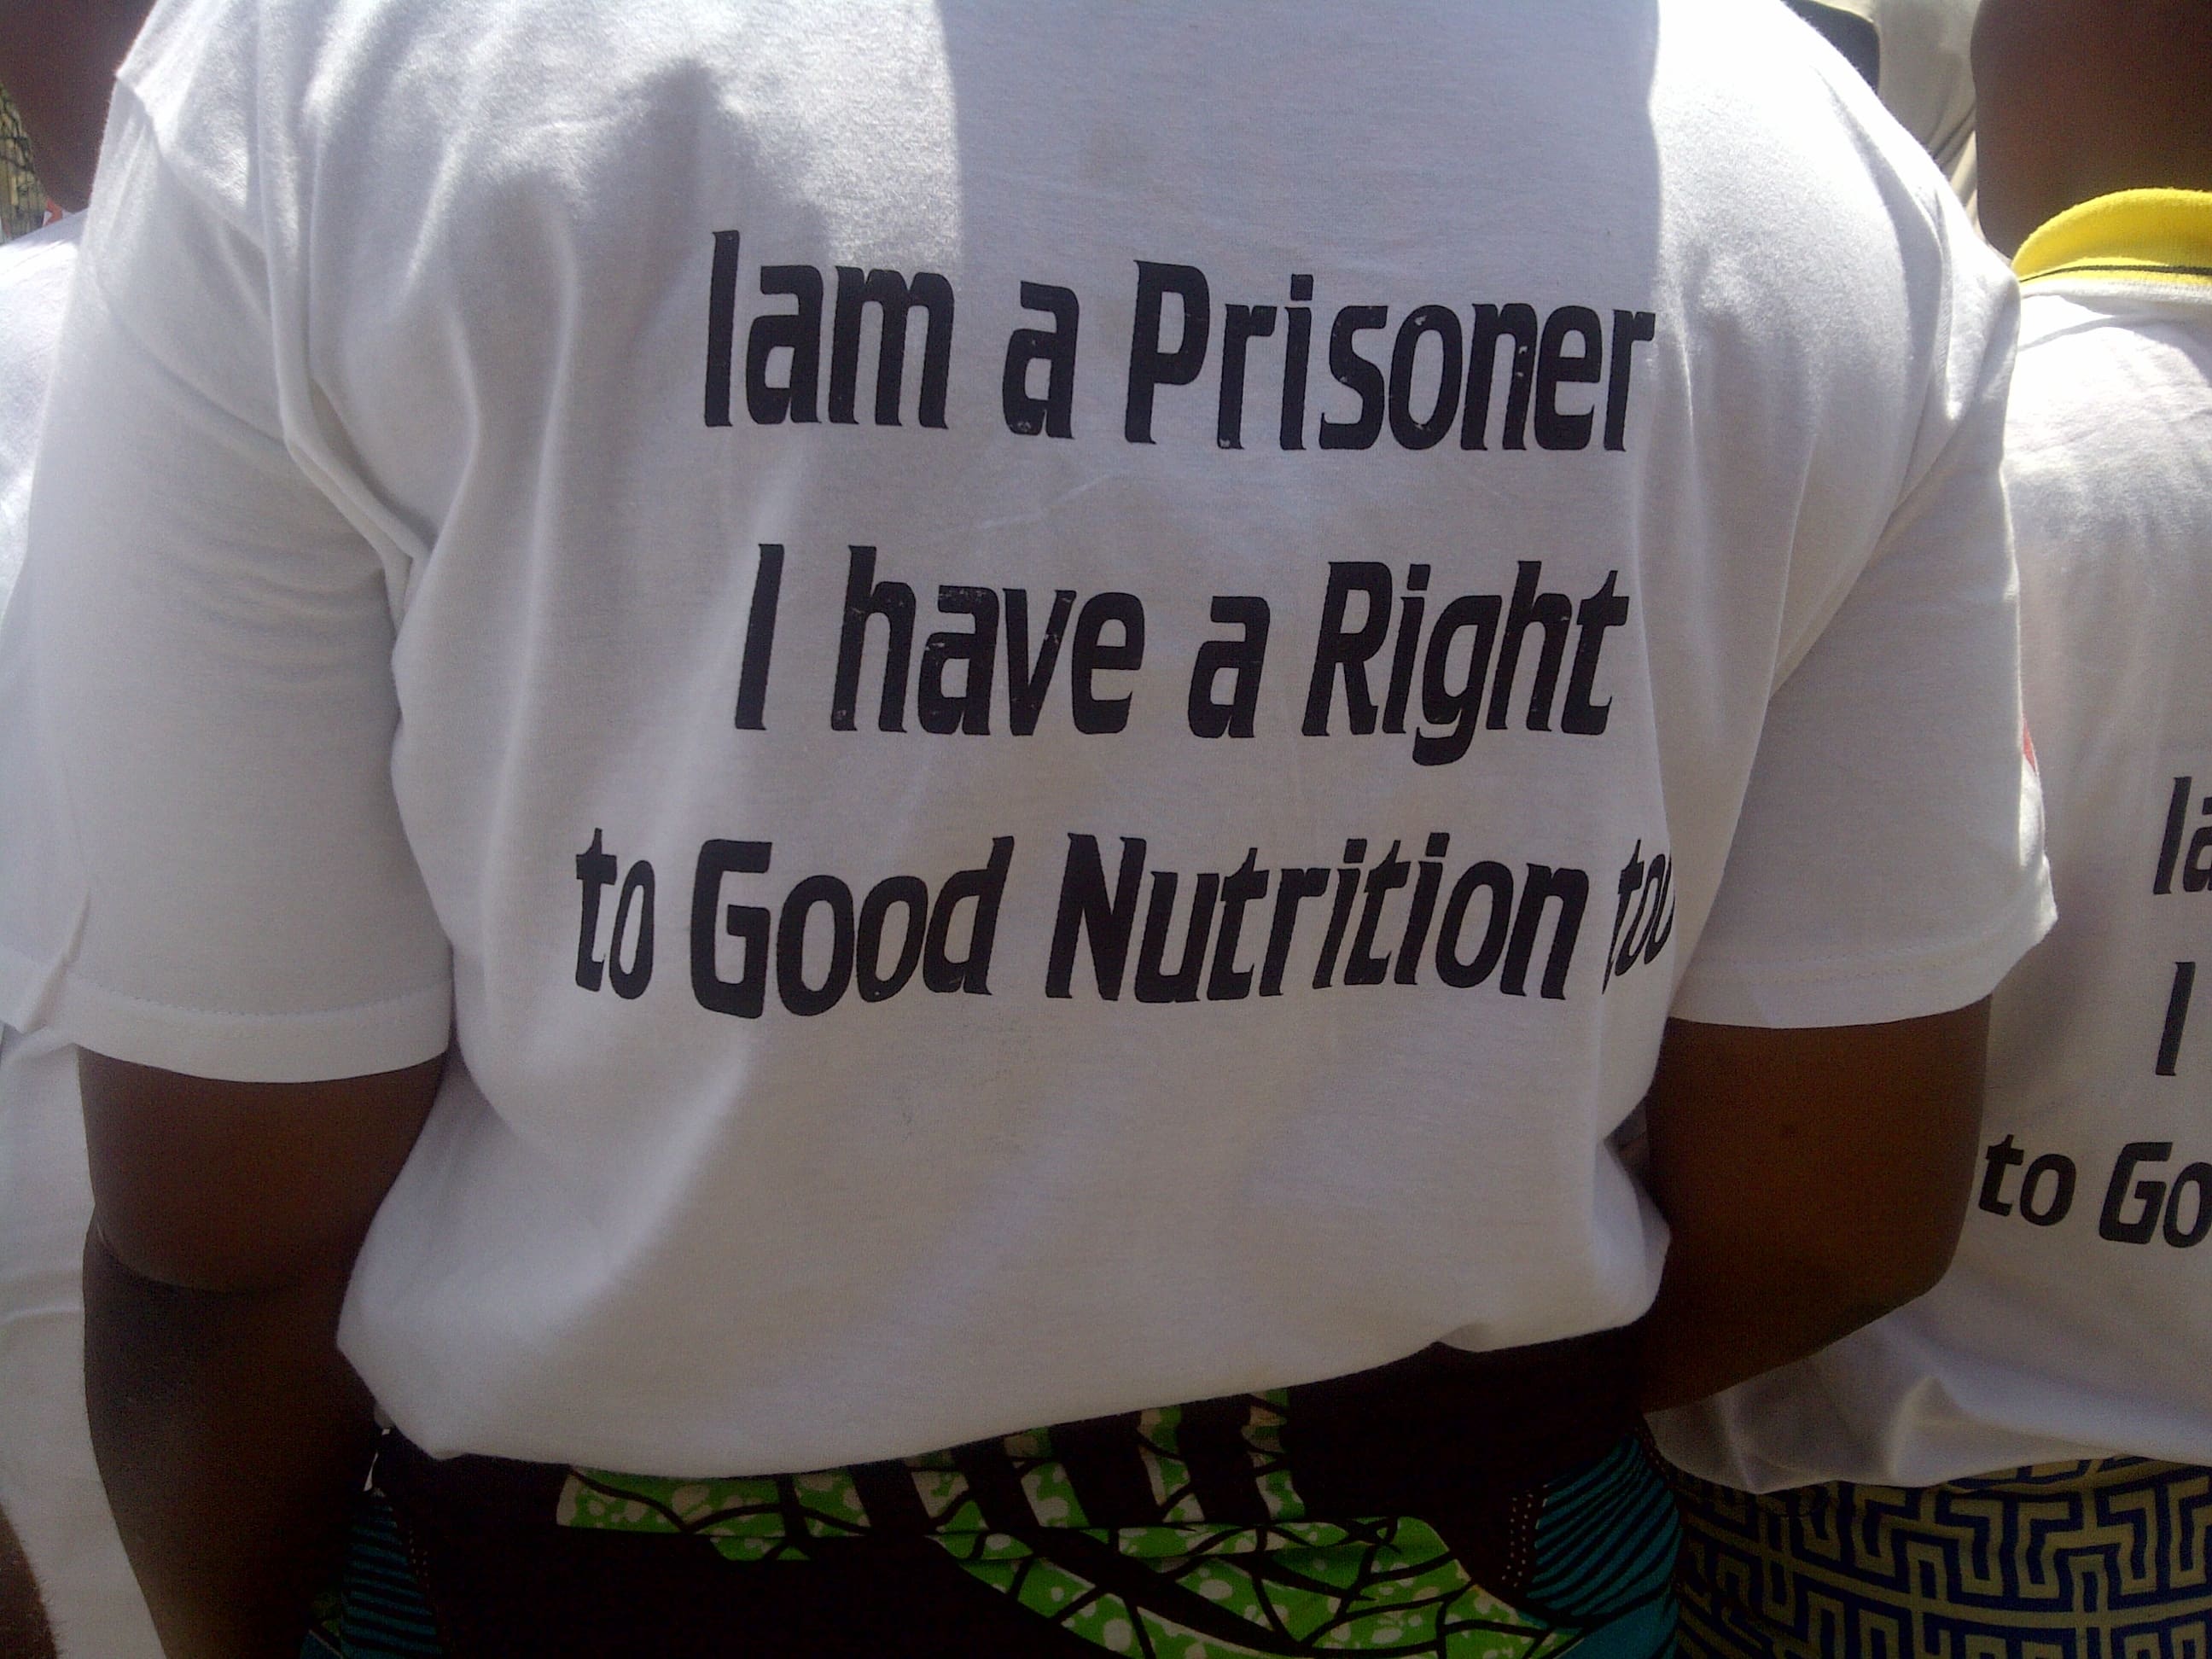 Zambia: Health Rights of HIV-Positive Prisoners